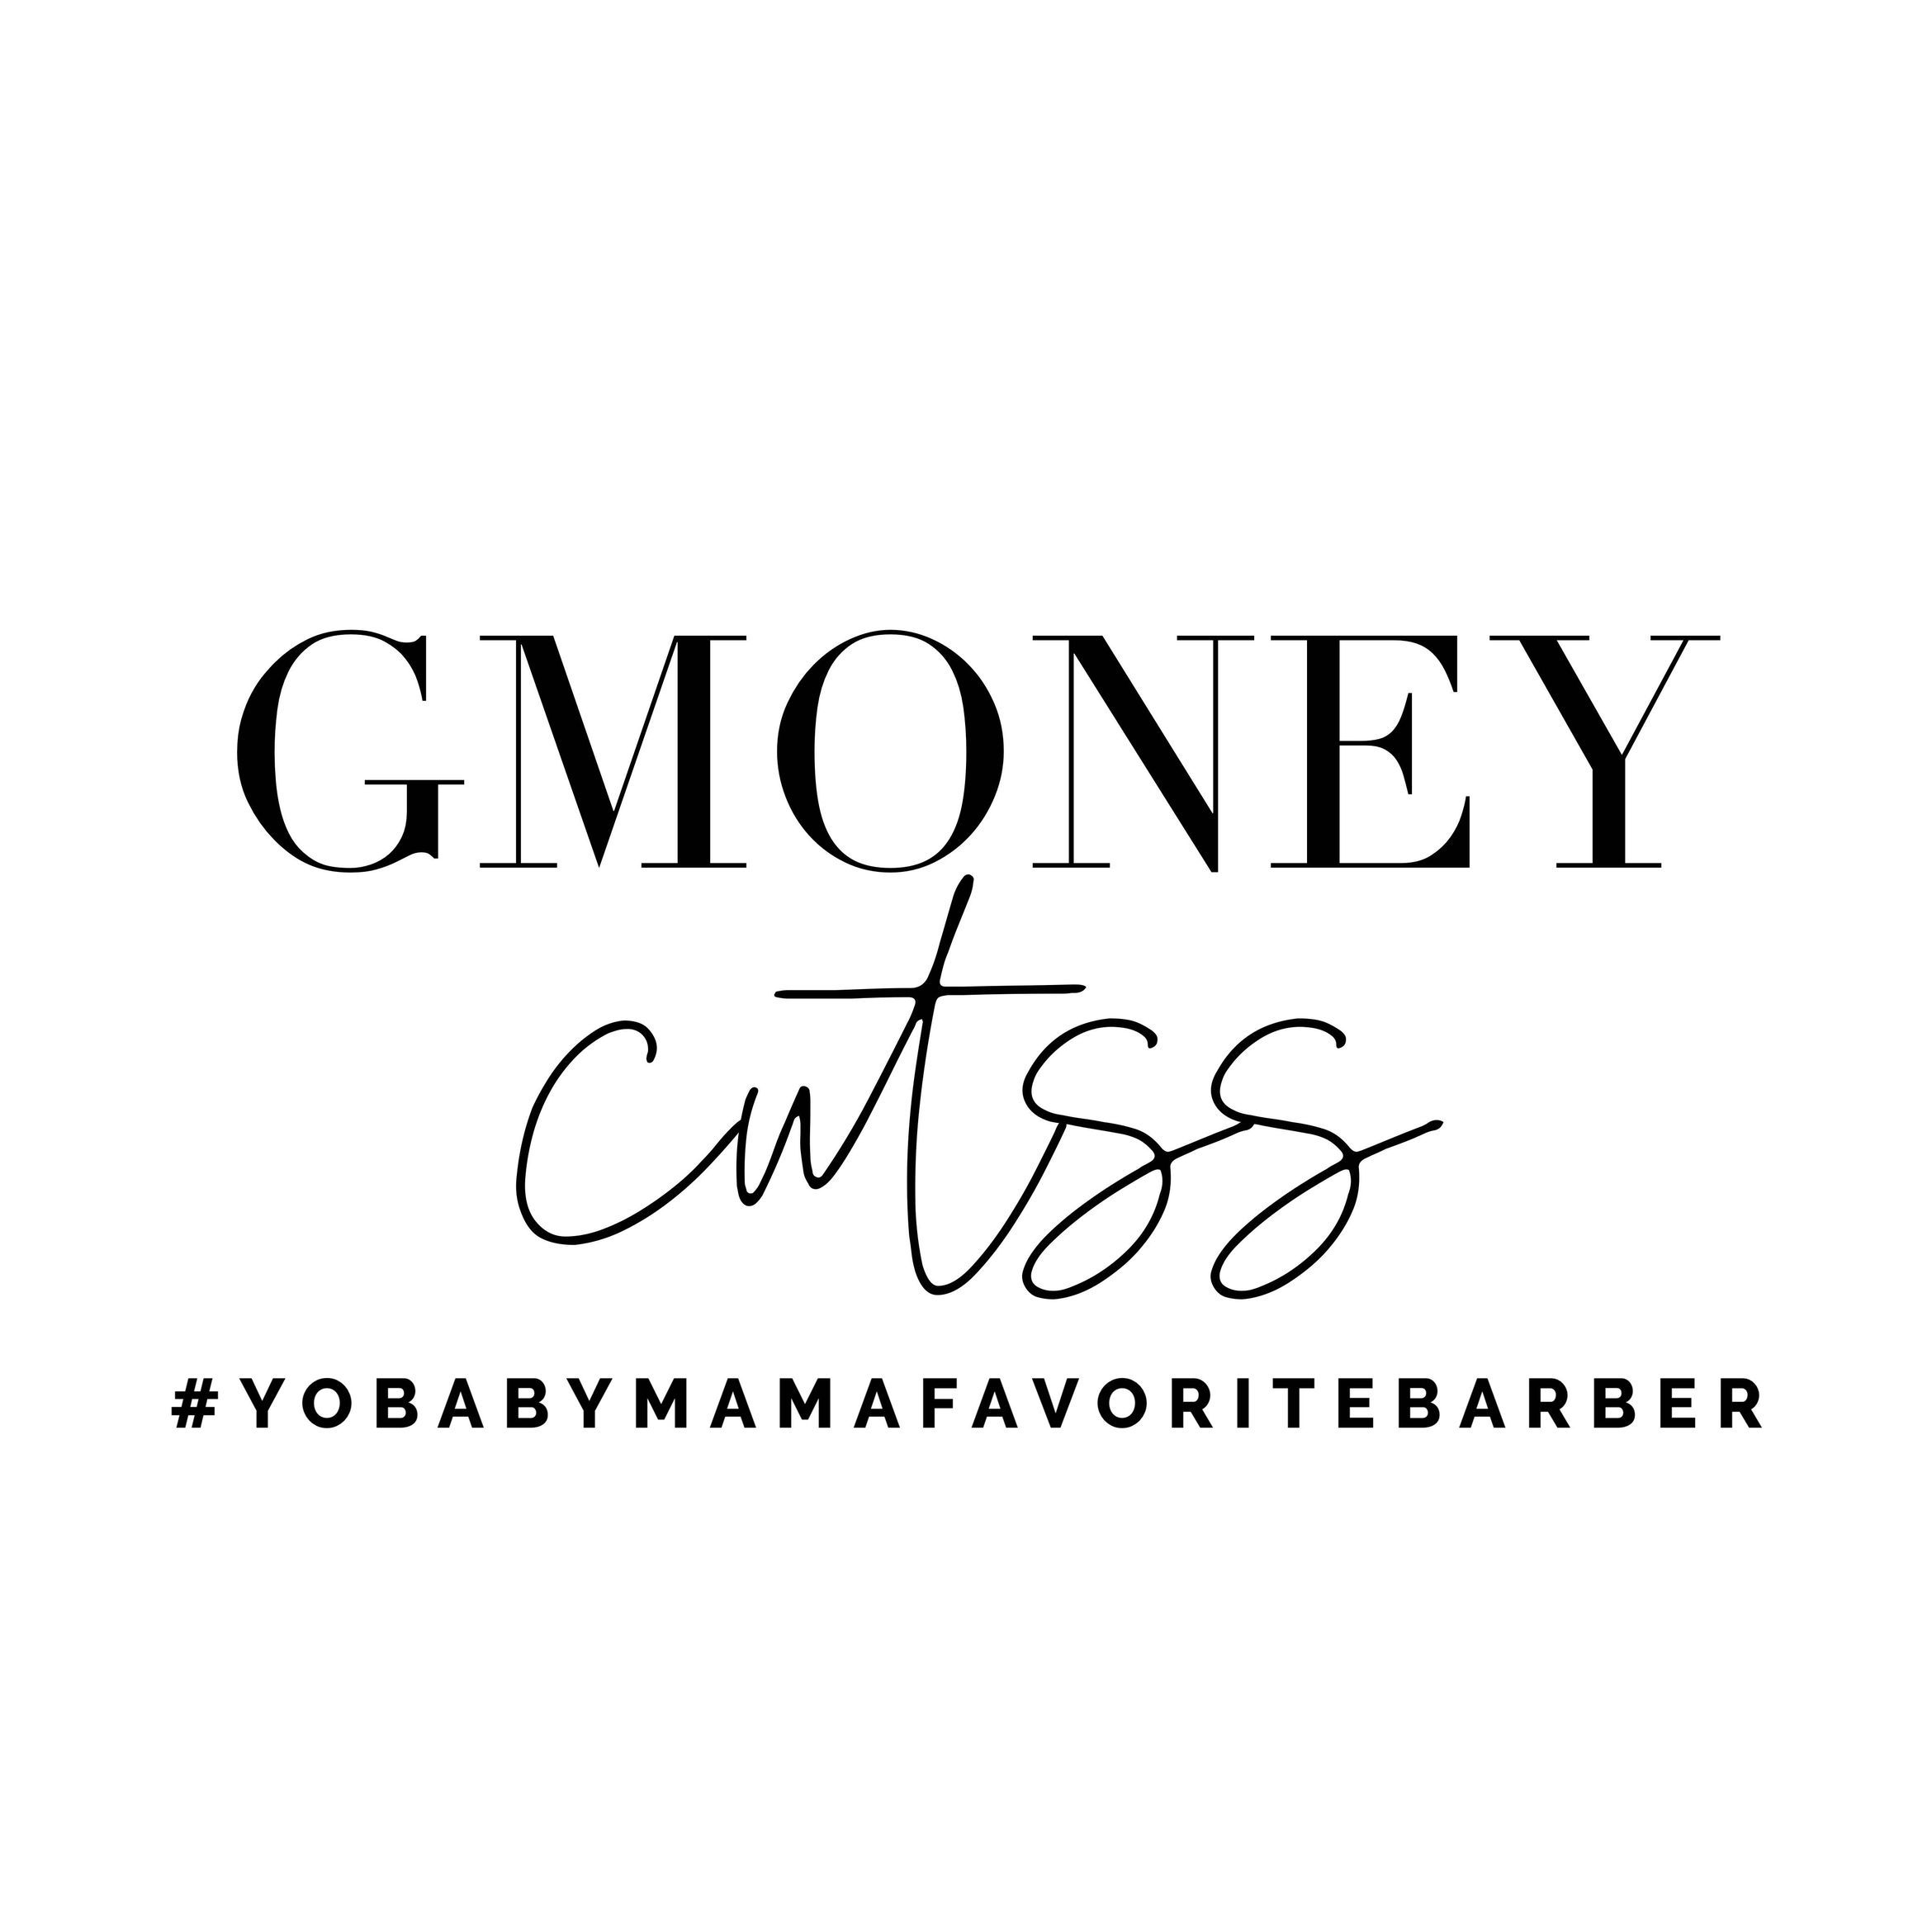 GMoney Cutss, 515 18th st, Yo baby mama favorite barber, Bakersfield, 93301